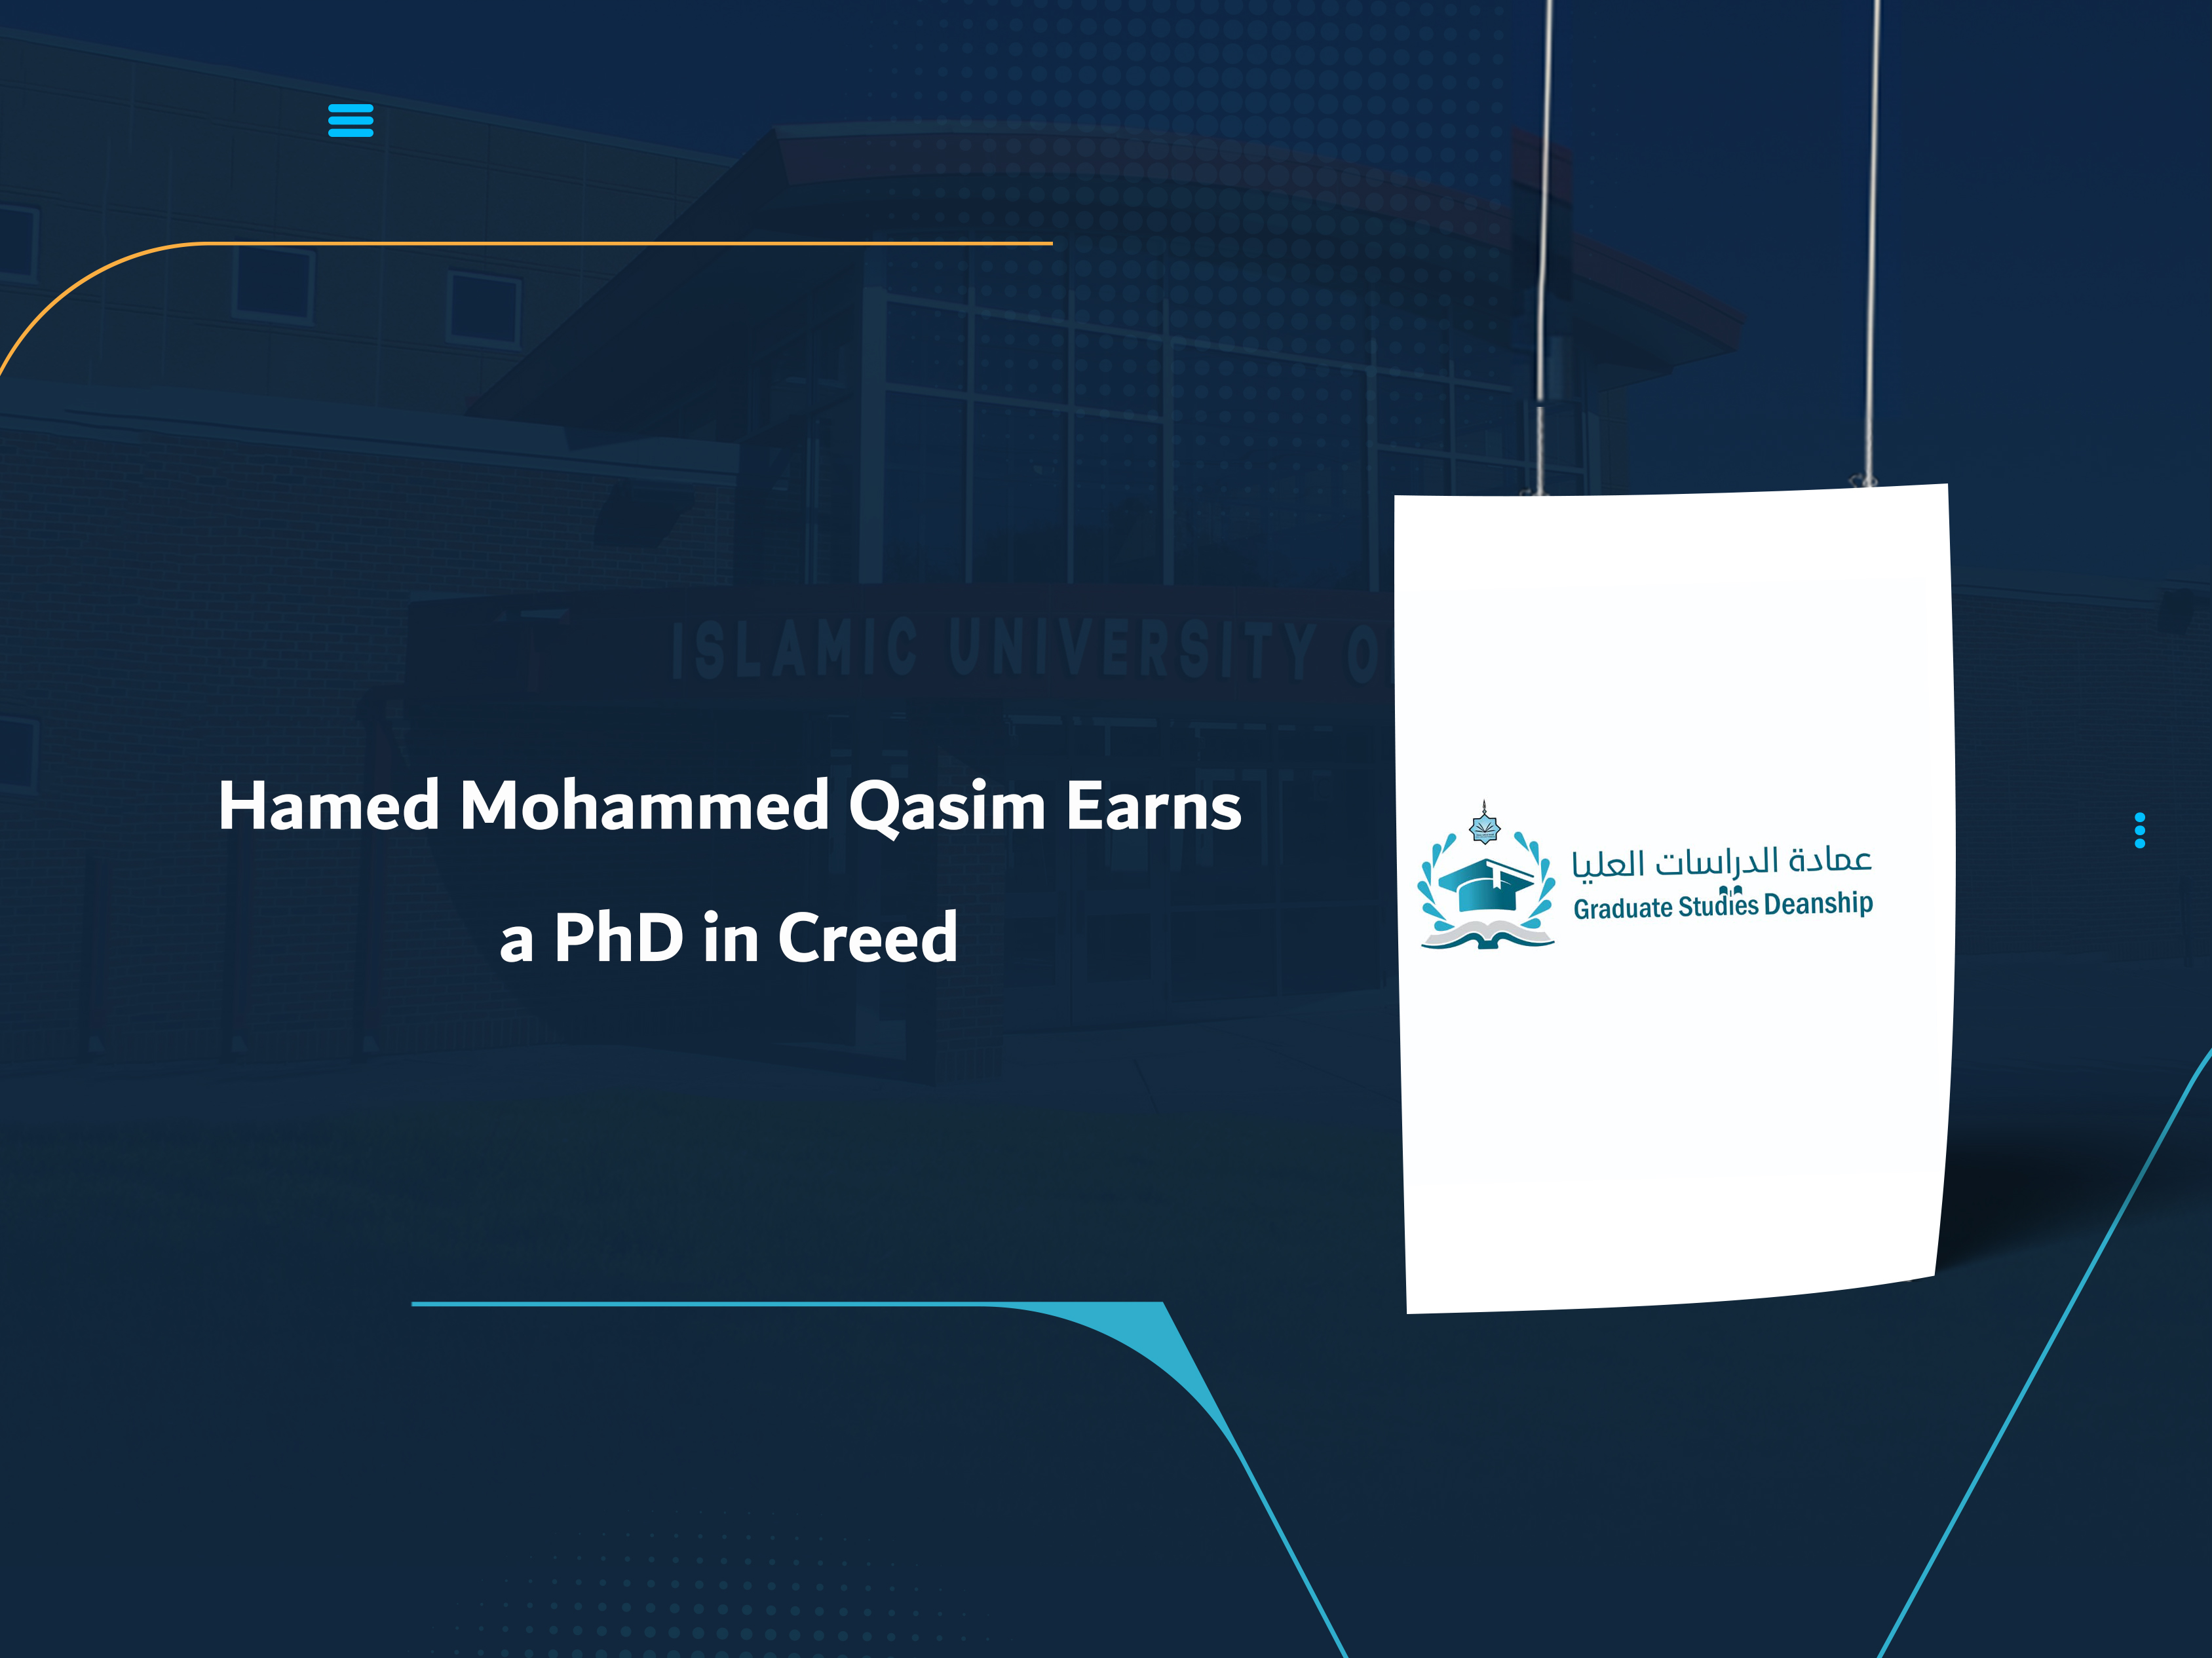 Hamed Mohammed Qasim Earns a PhD in Creed